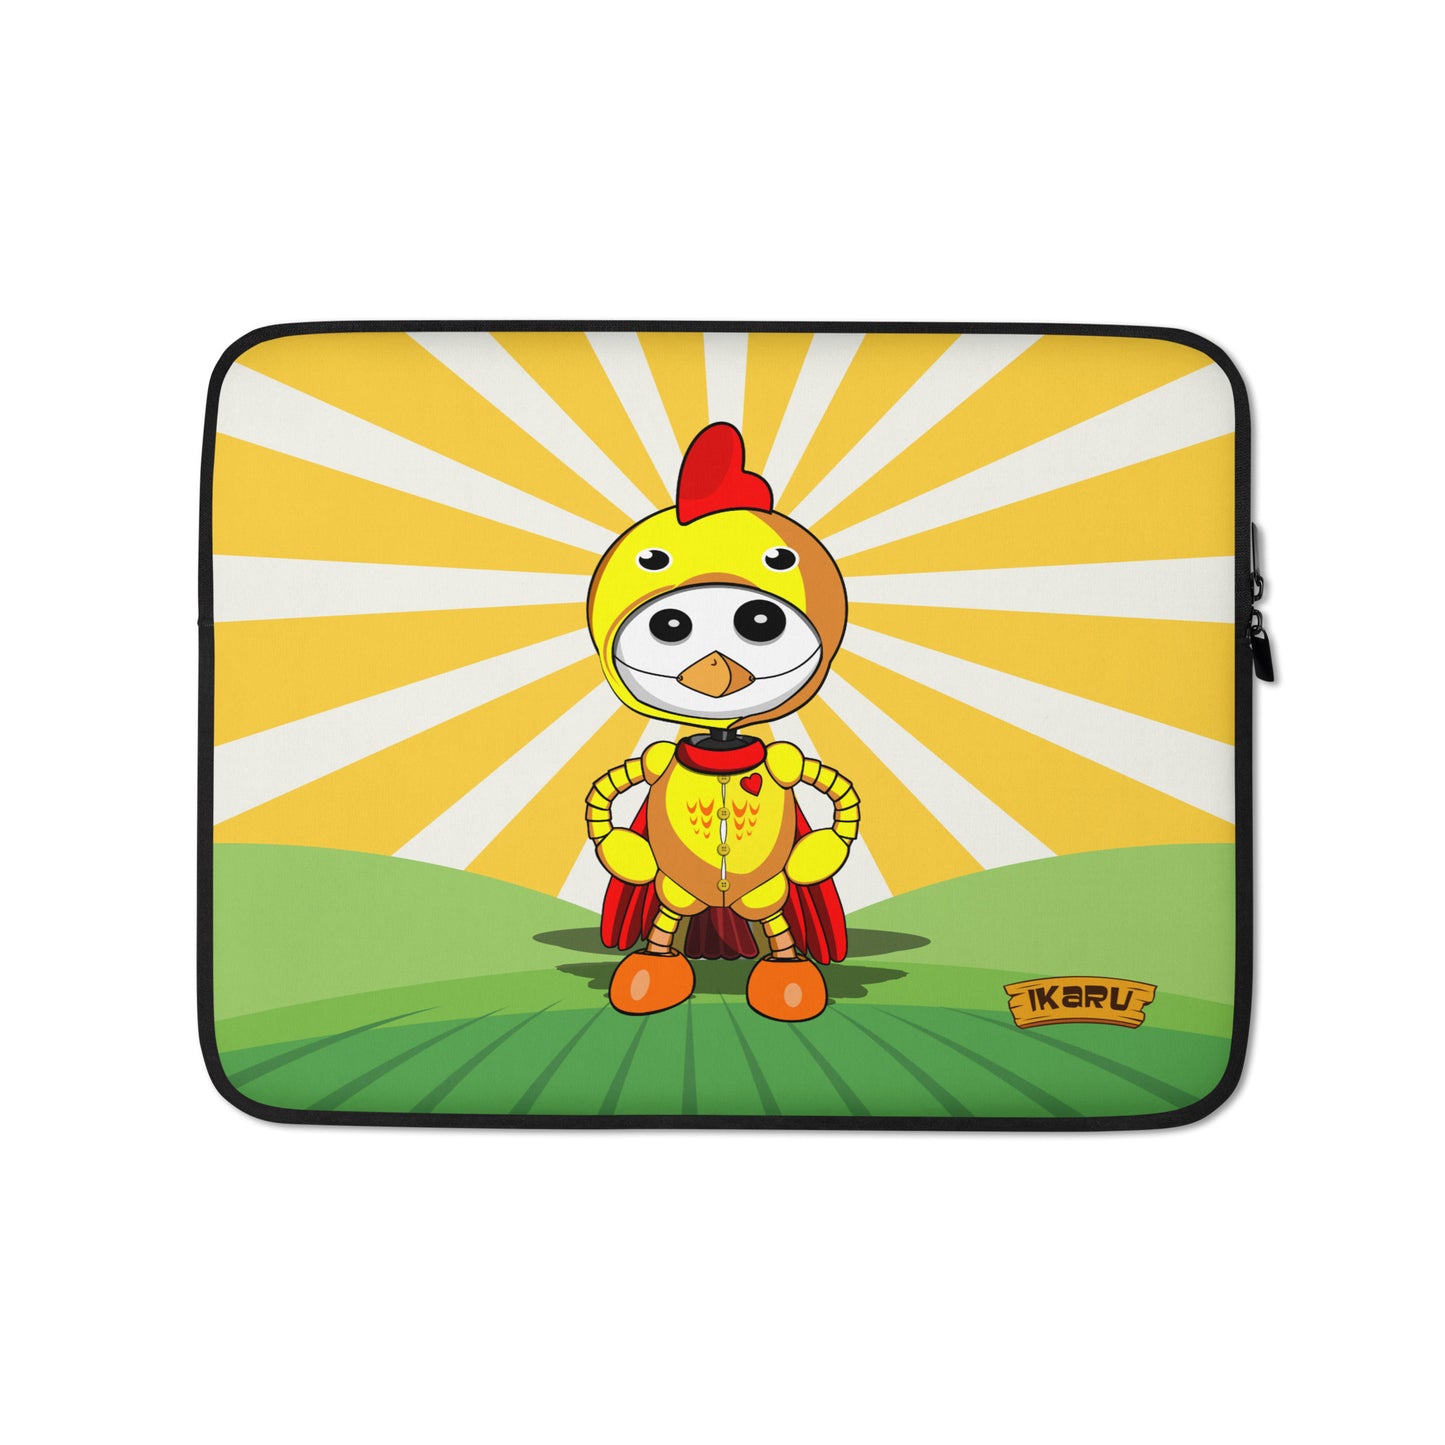 Ikaru Chicken (Laptop Sleeve)